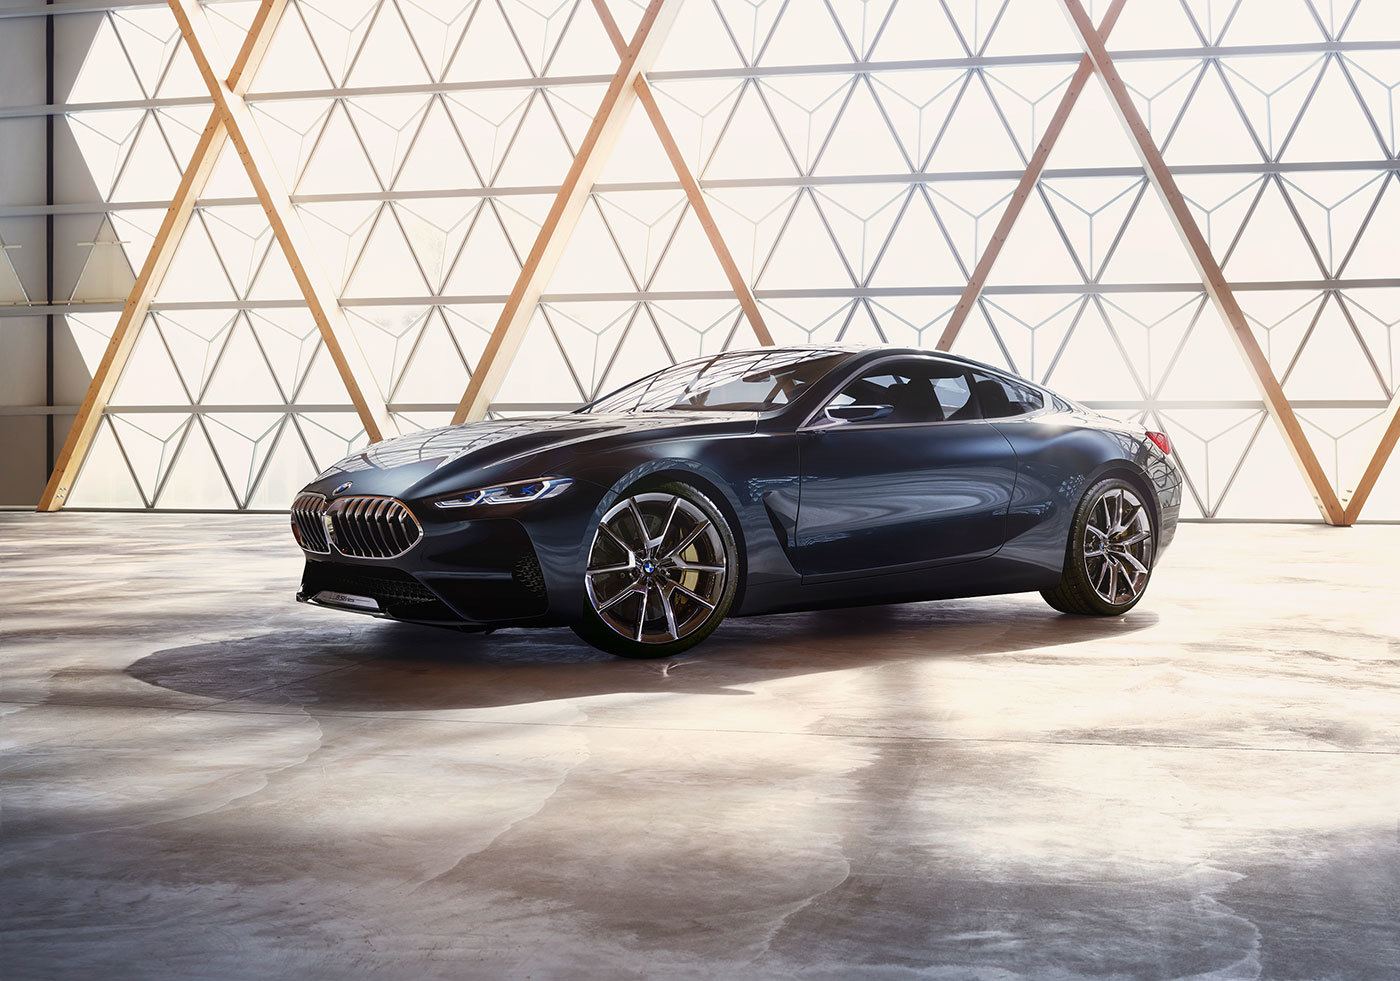 imagen 1 de BMW Serie 8 Concept, regreso al futuro. Ese deportivo coupé que querríamos todos.